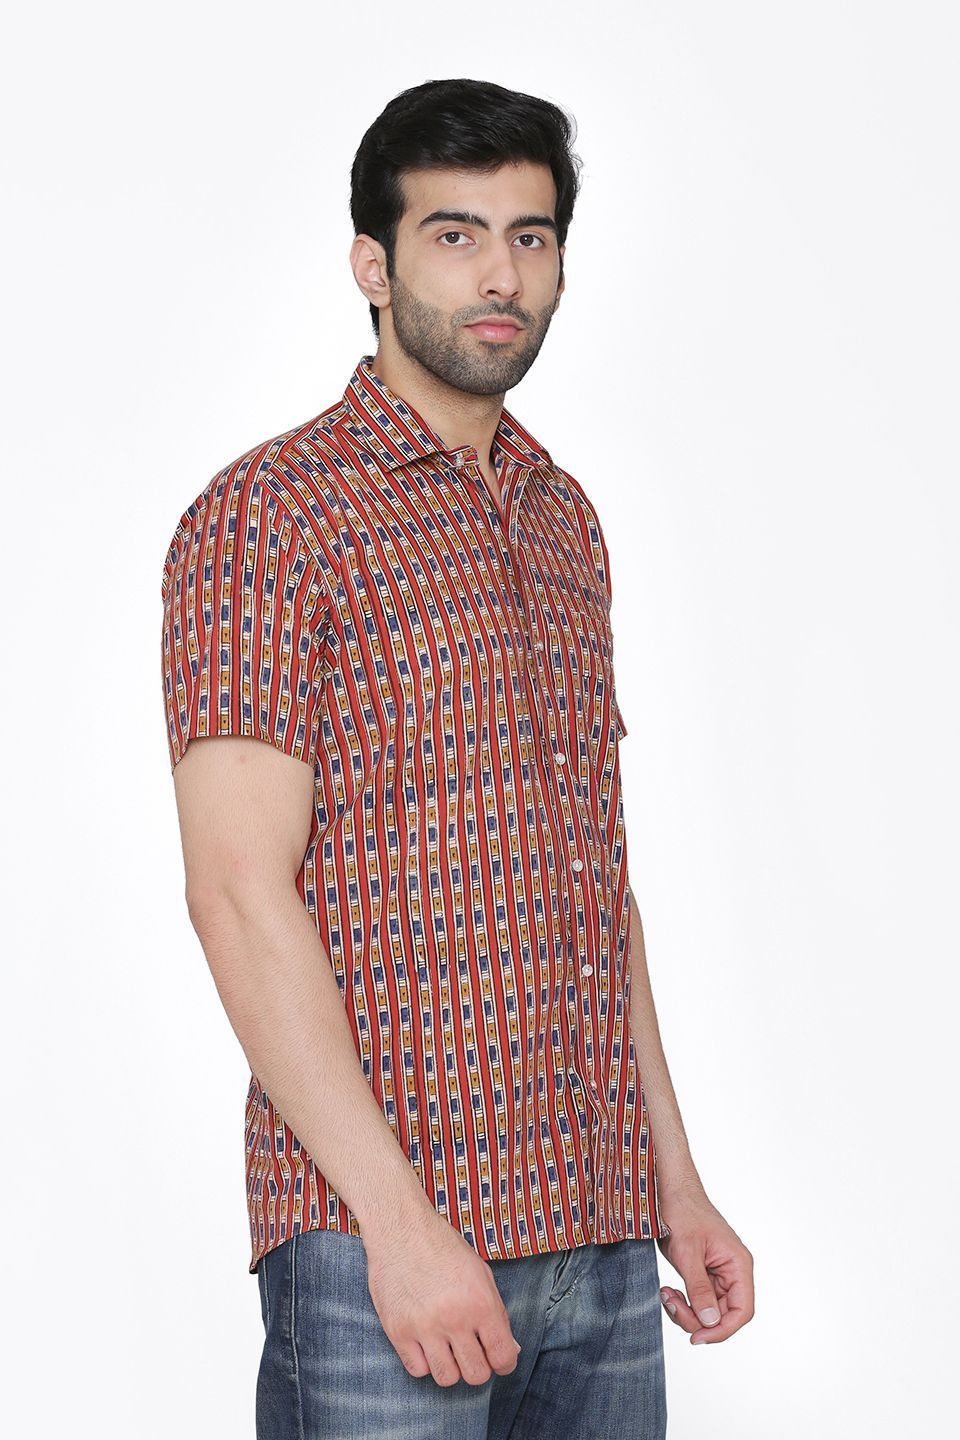 Jaipur 100%  Cotton multicolored Shirt